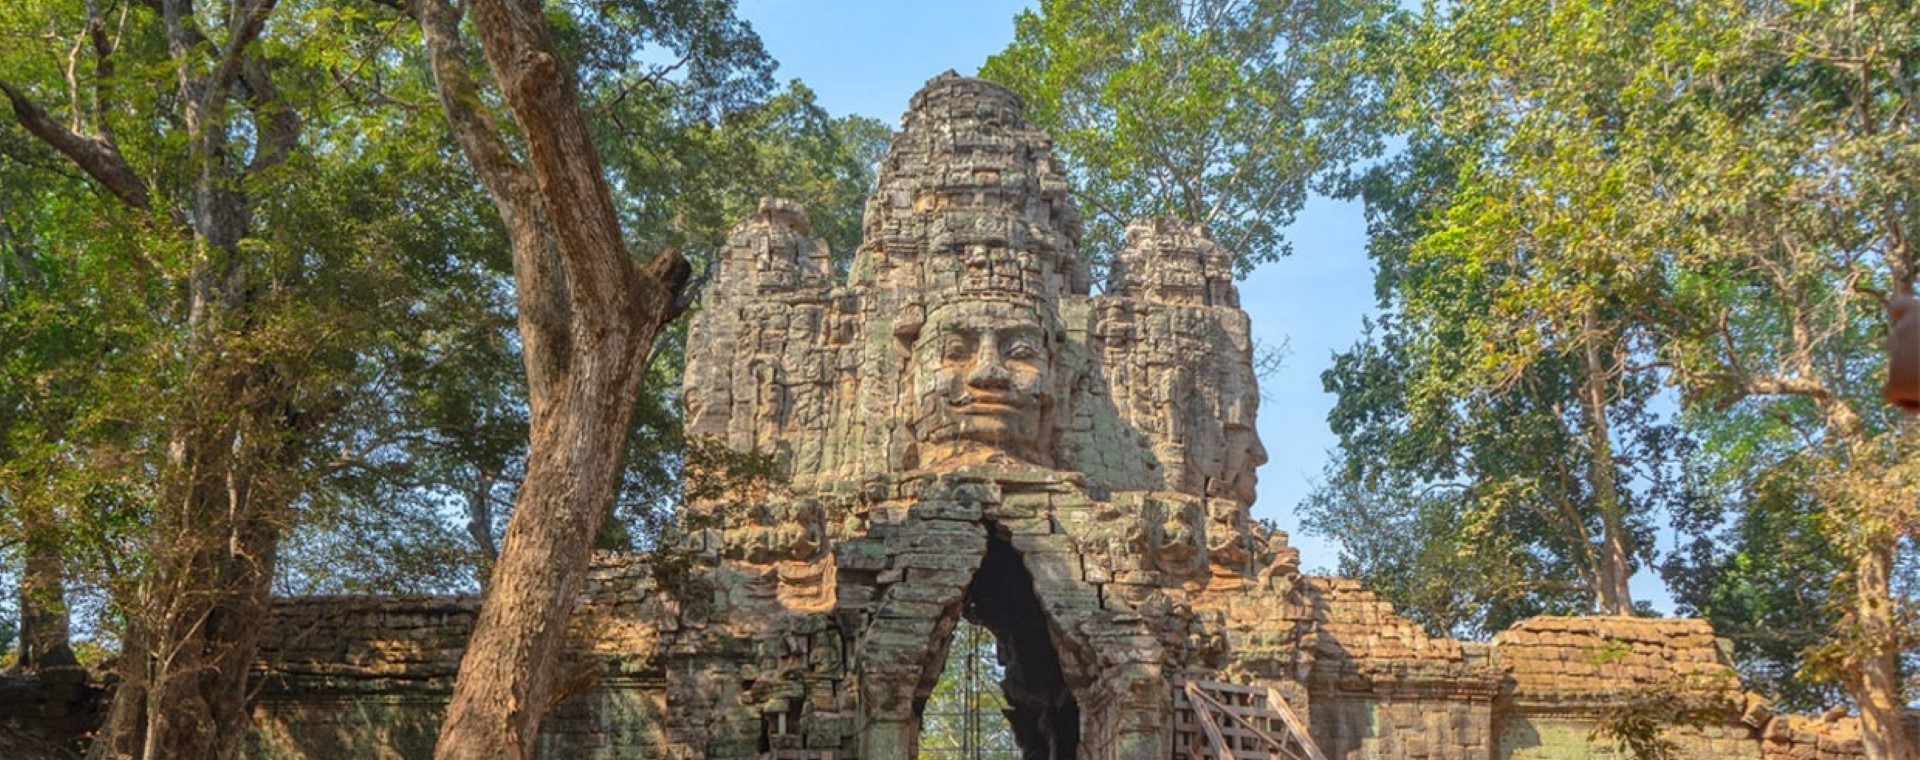 Cambodia Cycling Tour: Siem Reap 3 days 2nights